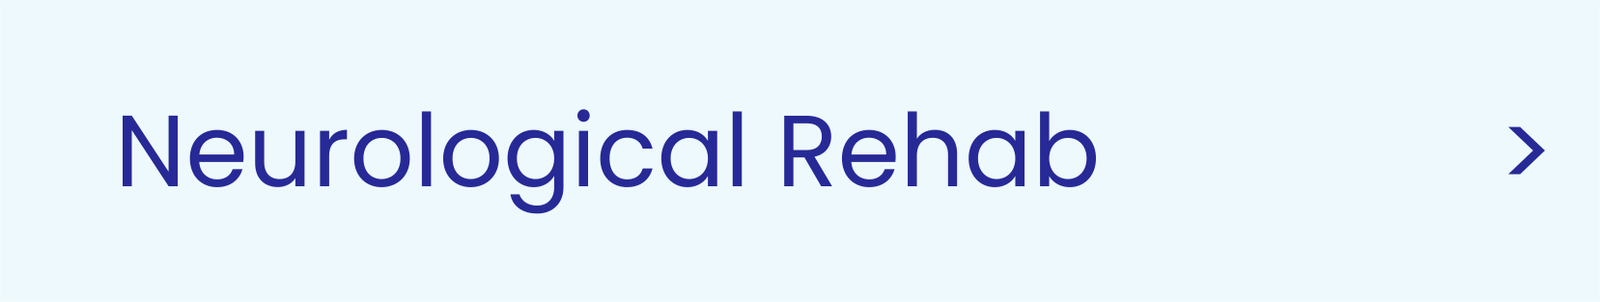 Orthopedic Rehab Neuro Tab 1